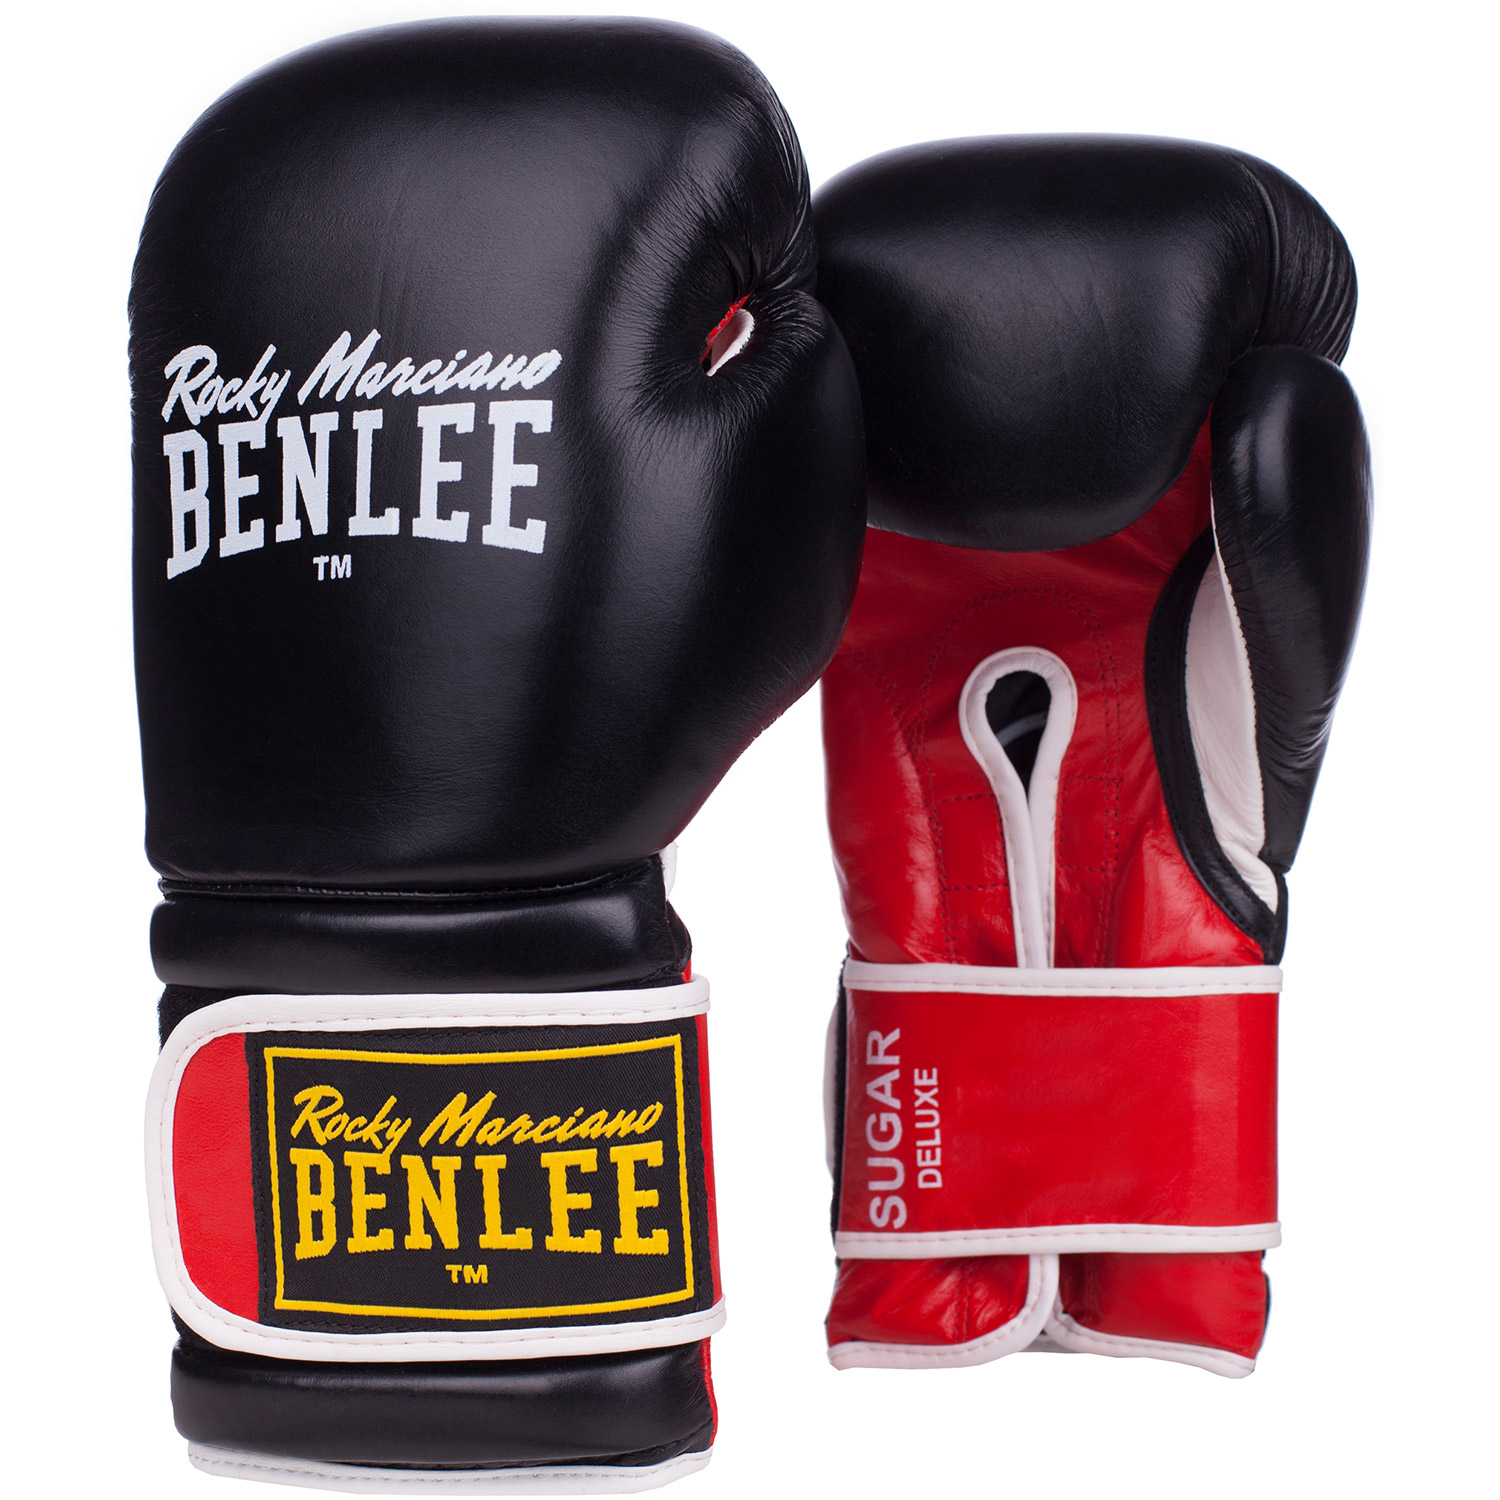 Benlee Sugar Deluxe boxing gloves 12 oz